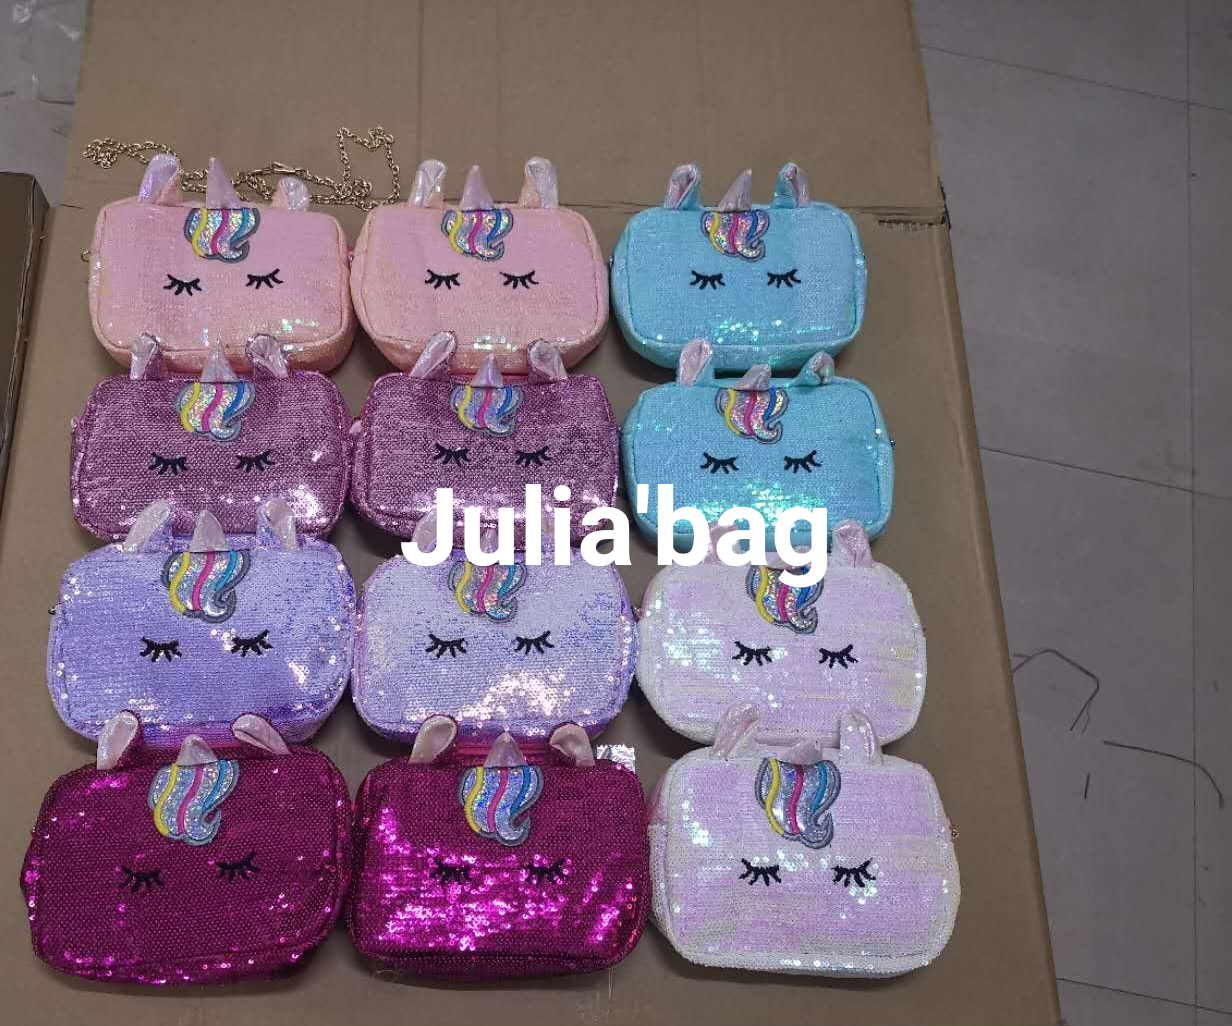 unicorn sequins bag wing design fur material baby bag cartoon mobile bag coin purse